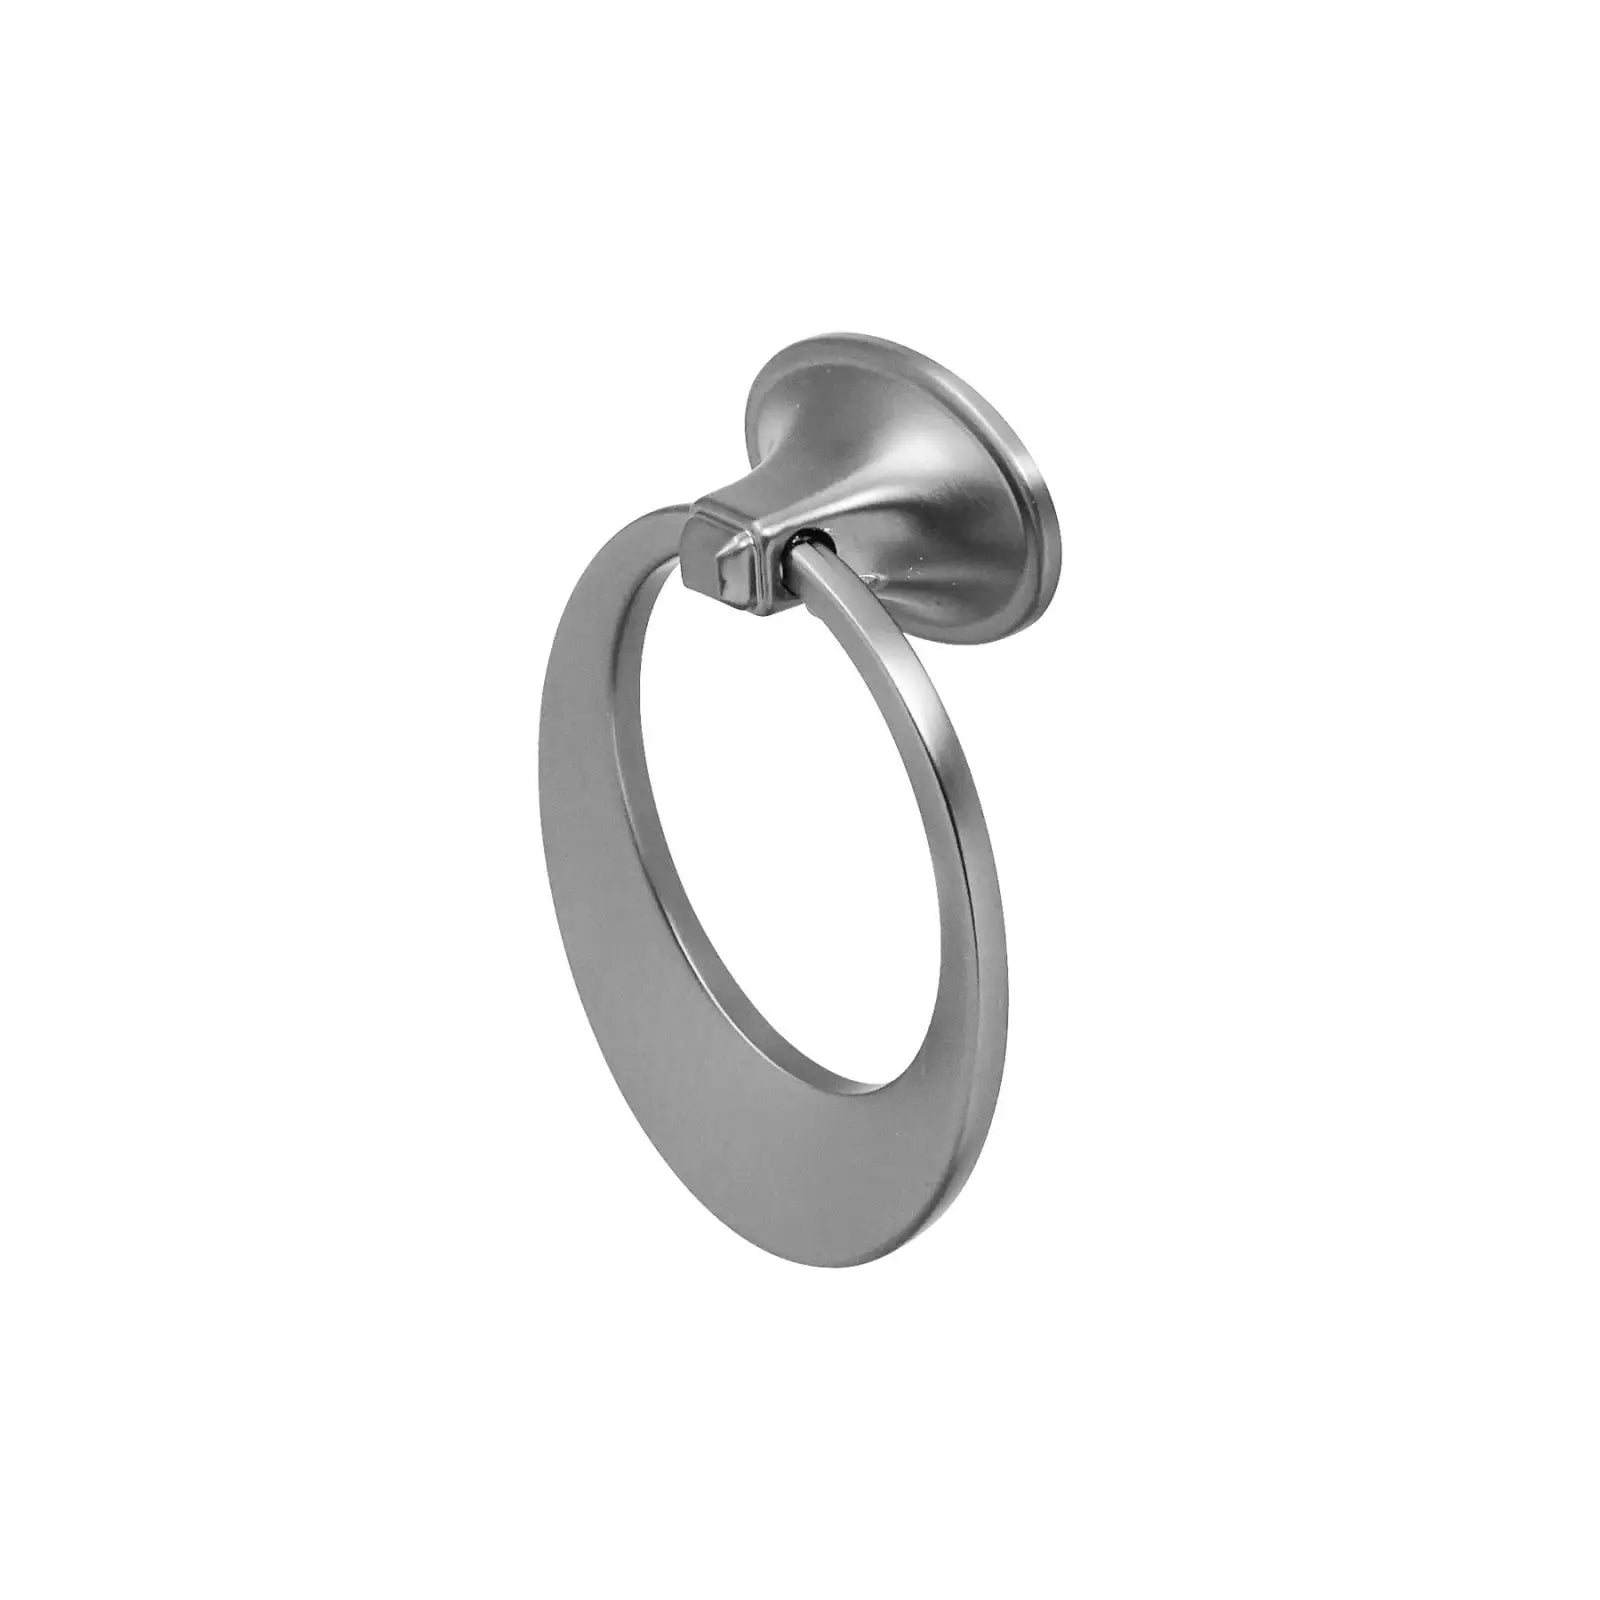 Sedona - Round Drop Ring Pull Handle - Graphite - Decor And Decor